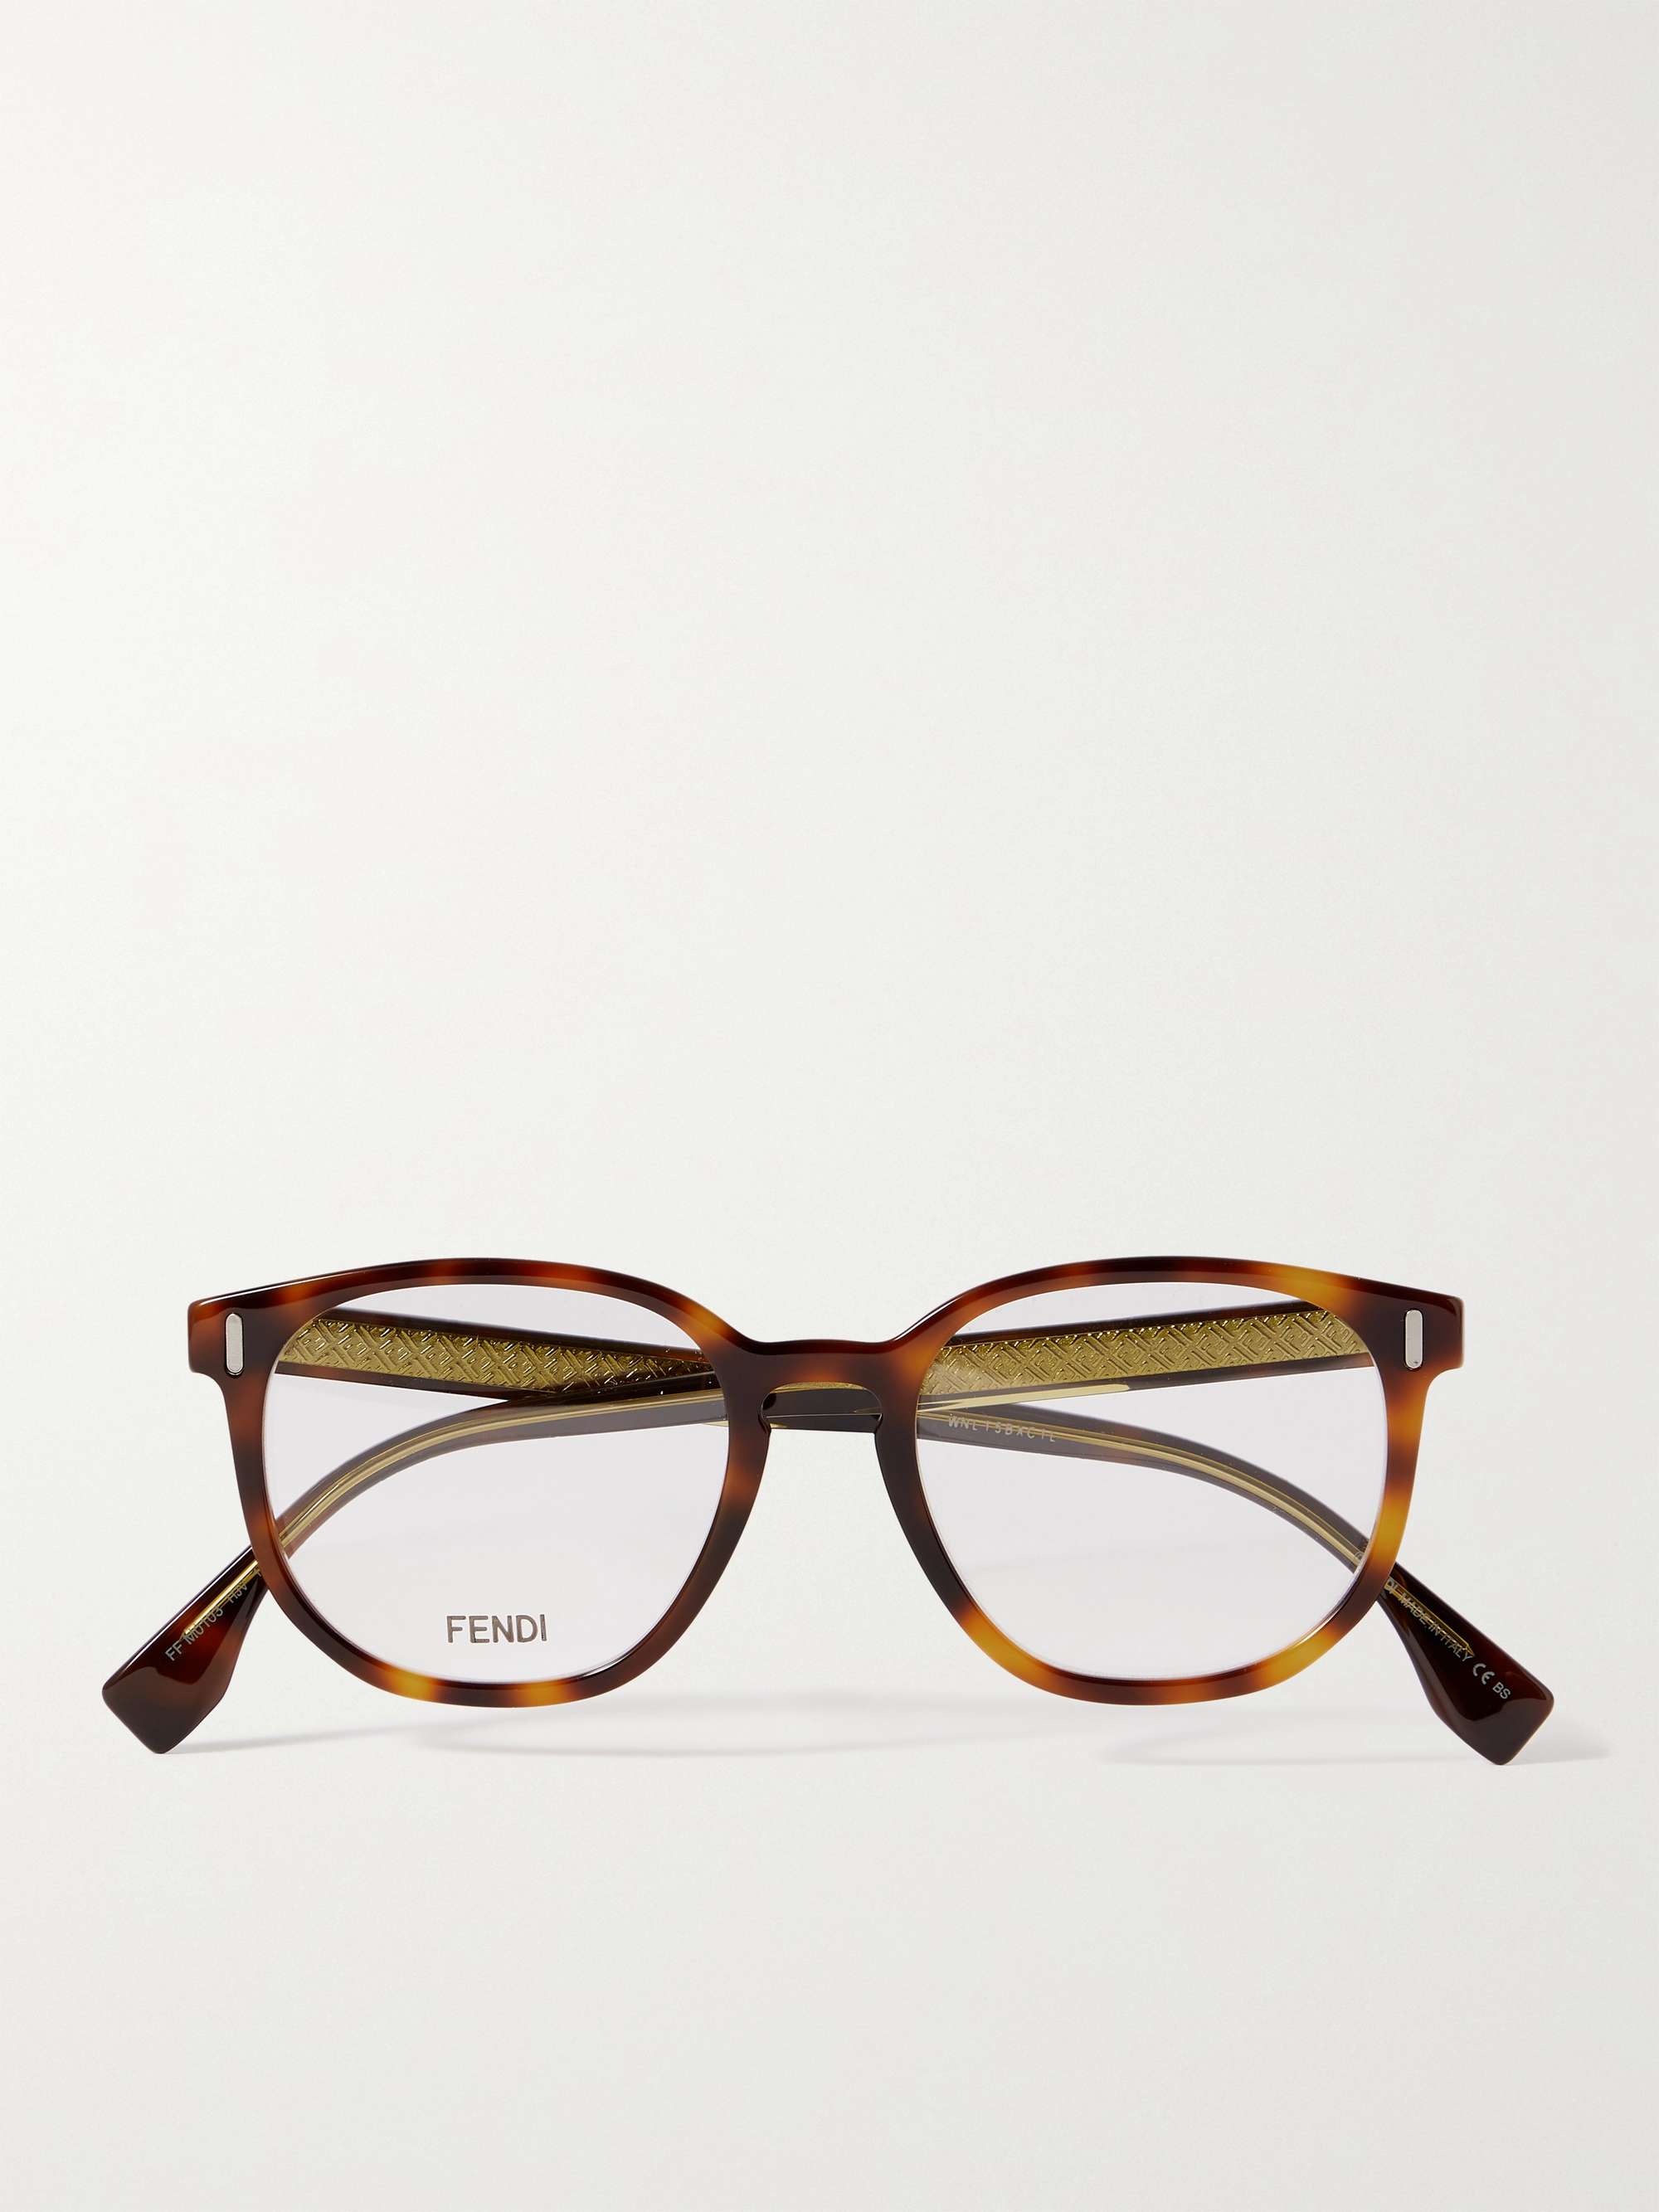 FENDI Round-Frame Tortoiseshell Acetate Optical Glasses